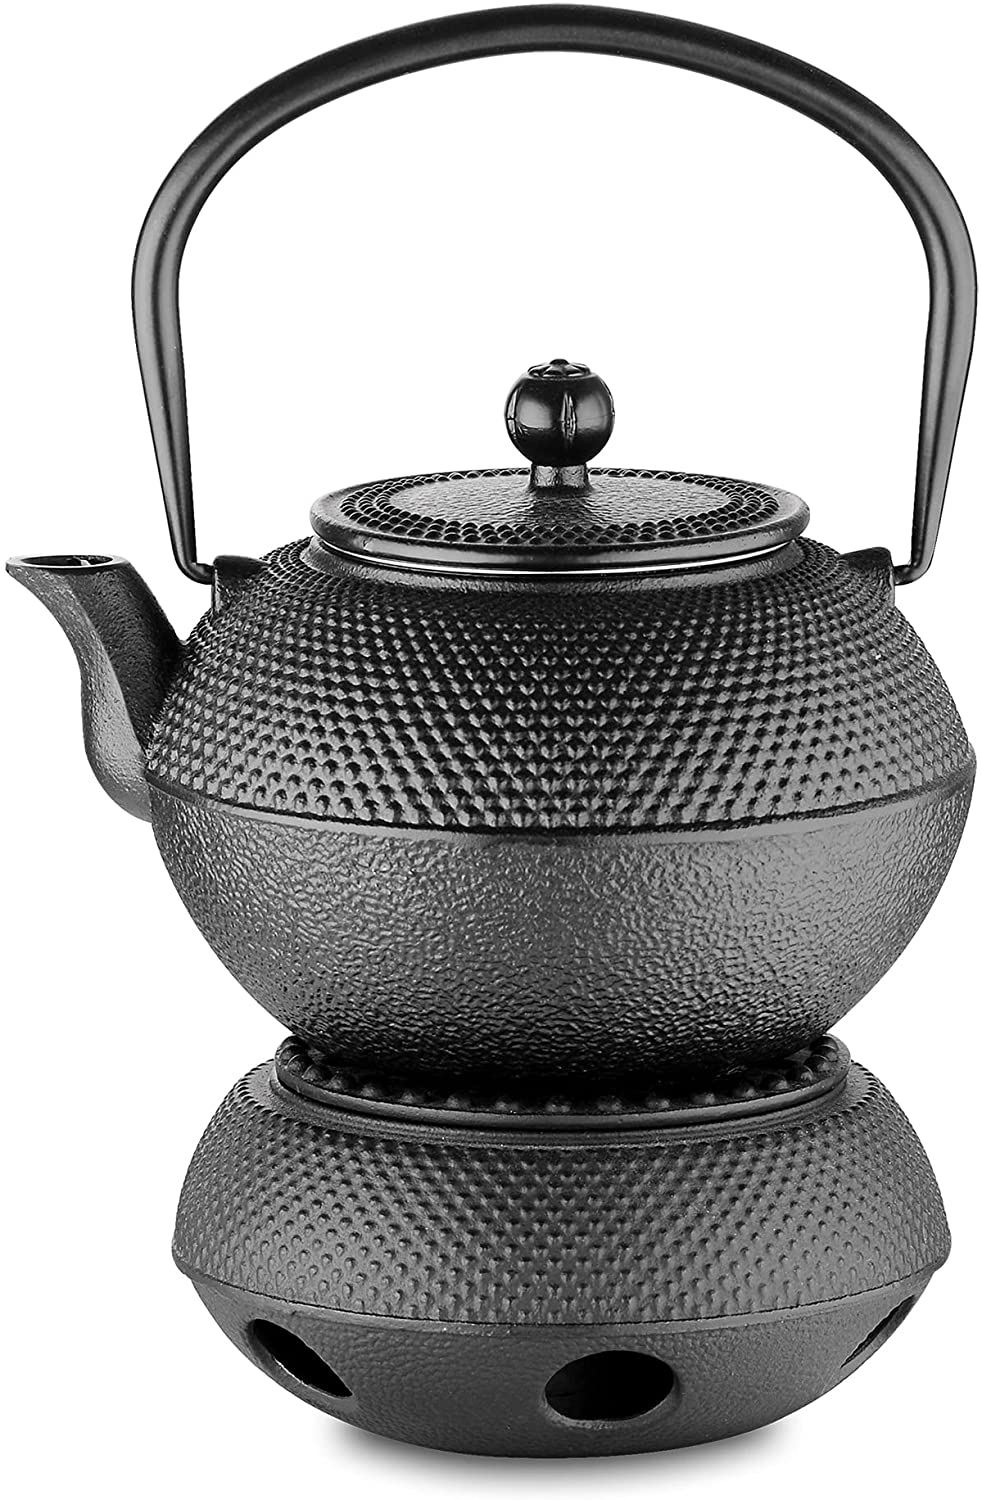 Velaze Cast Iron Teapot, Asian Teapot, Dimpled Texture, Black